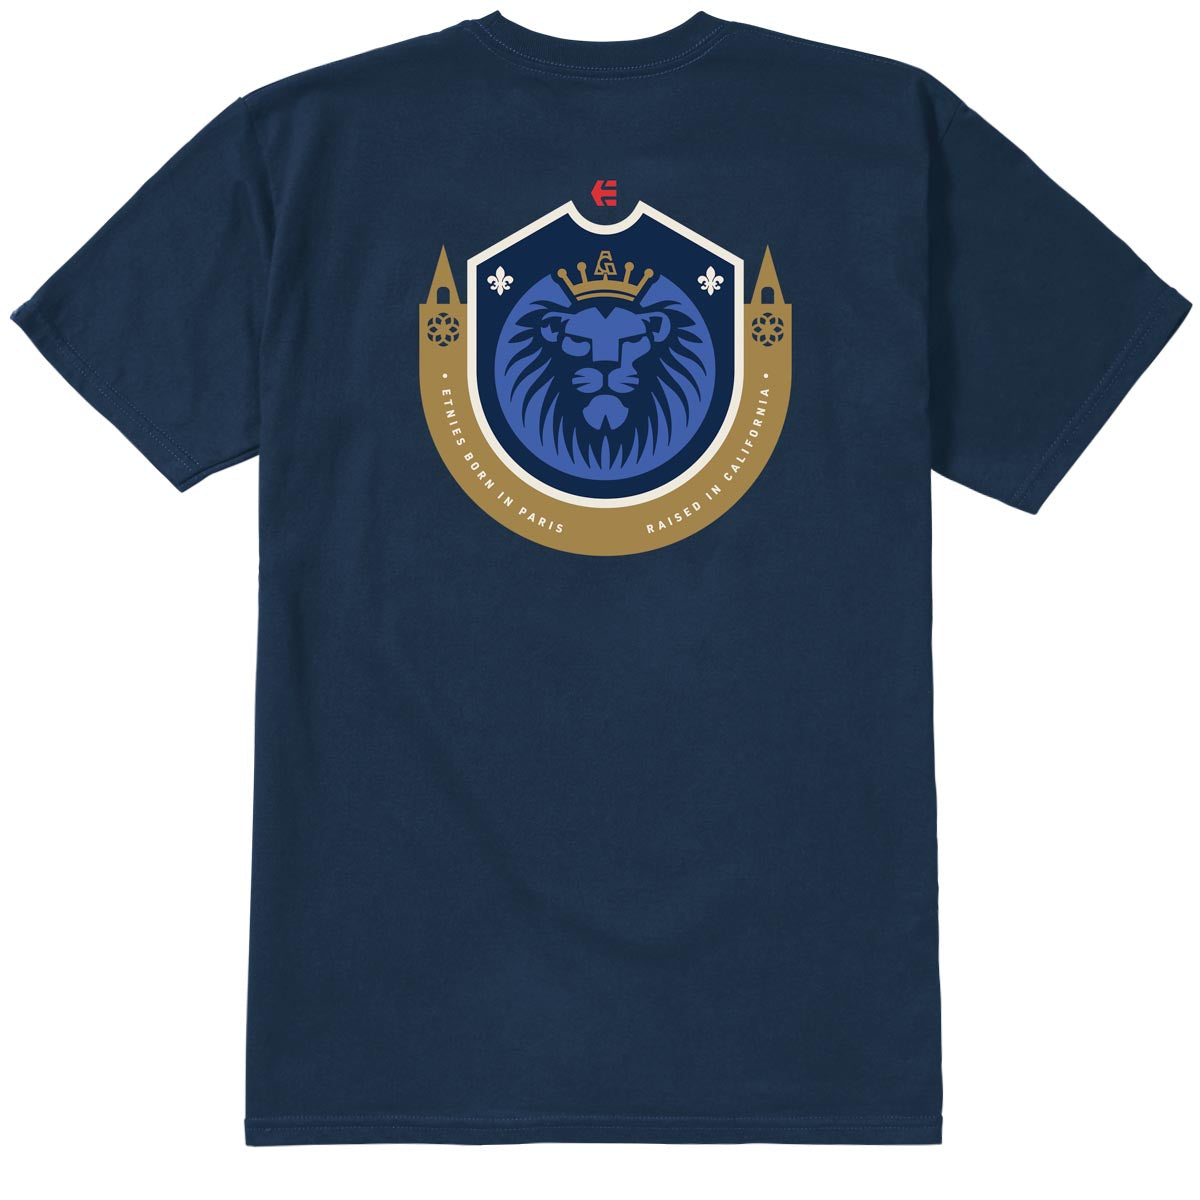 Etnies AG T-Shirt - Navy image 1